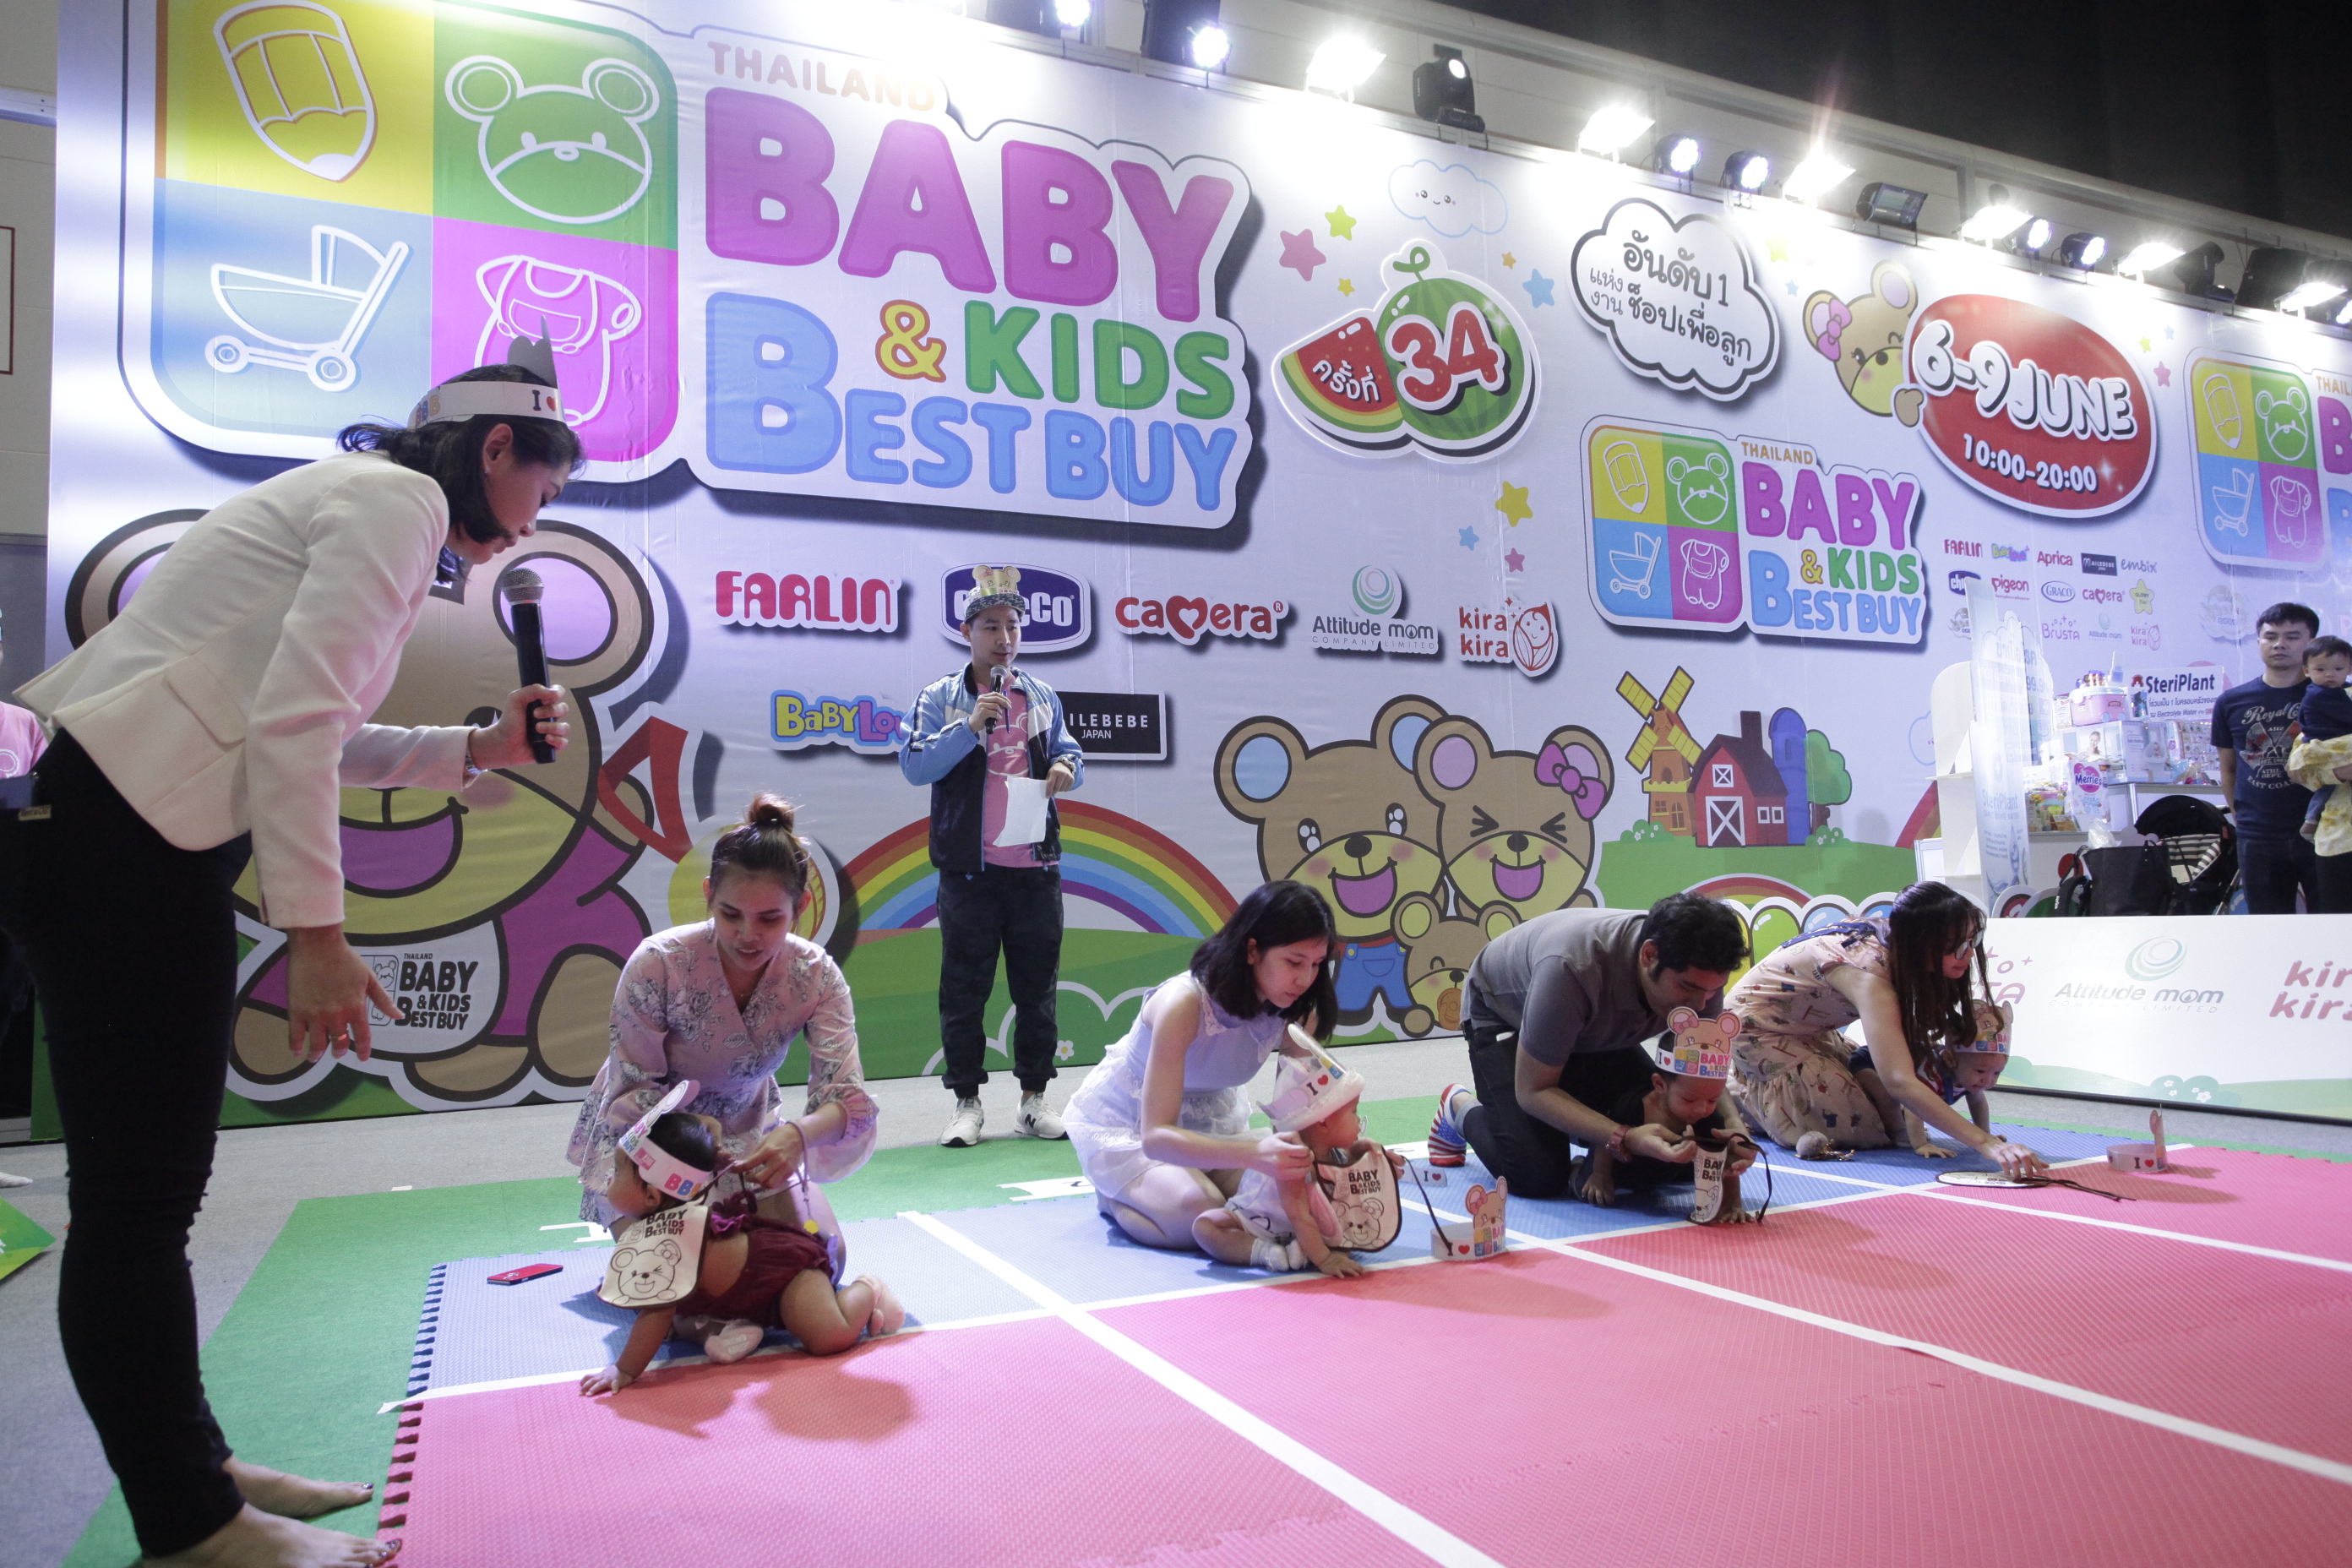 Thailand Baby & Kids Best Buy ครั้งที่ 34